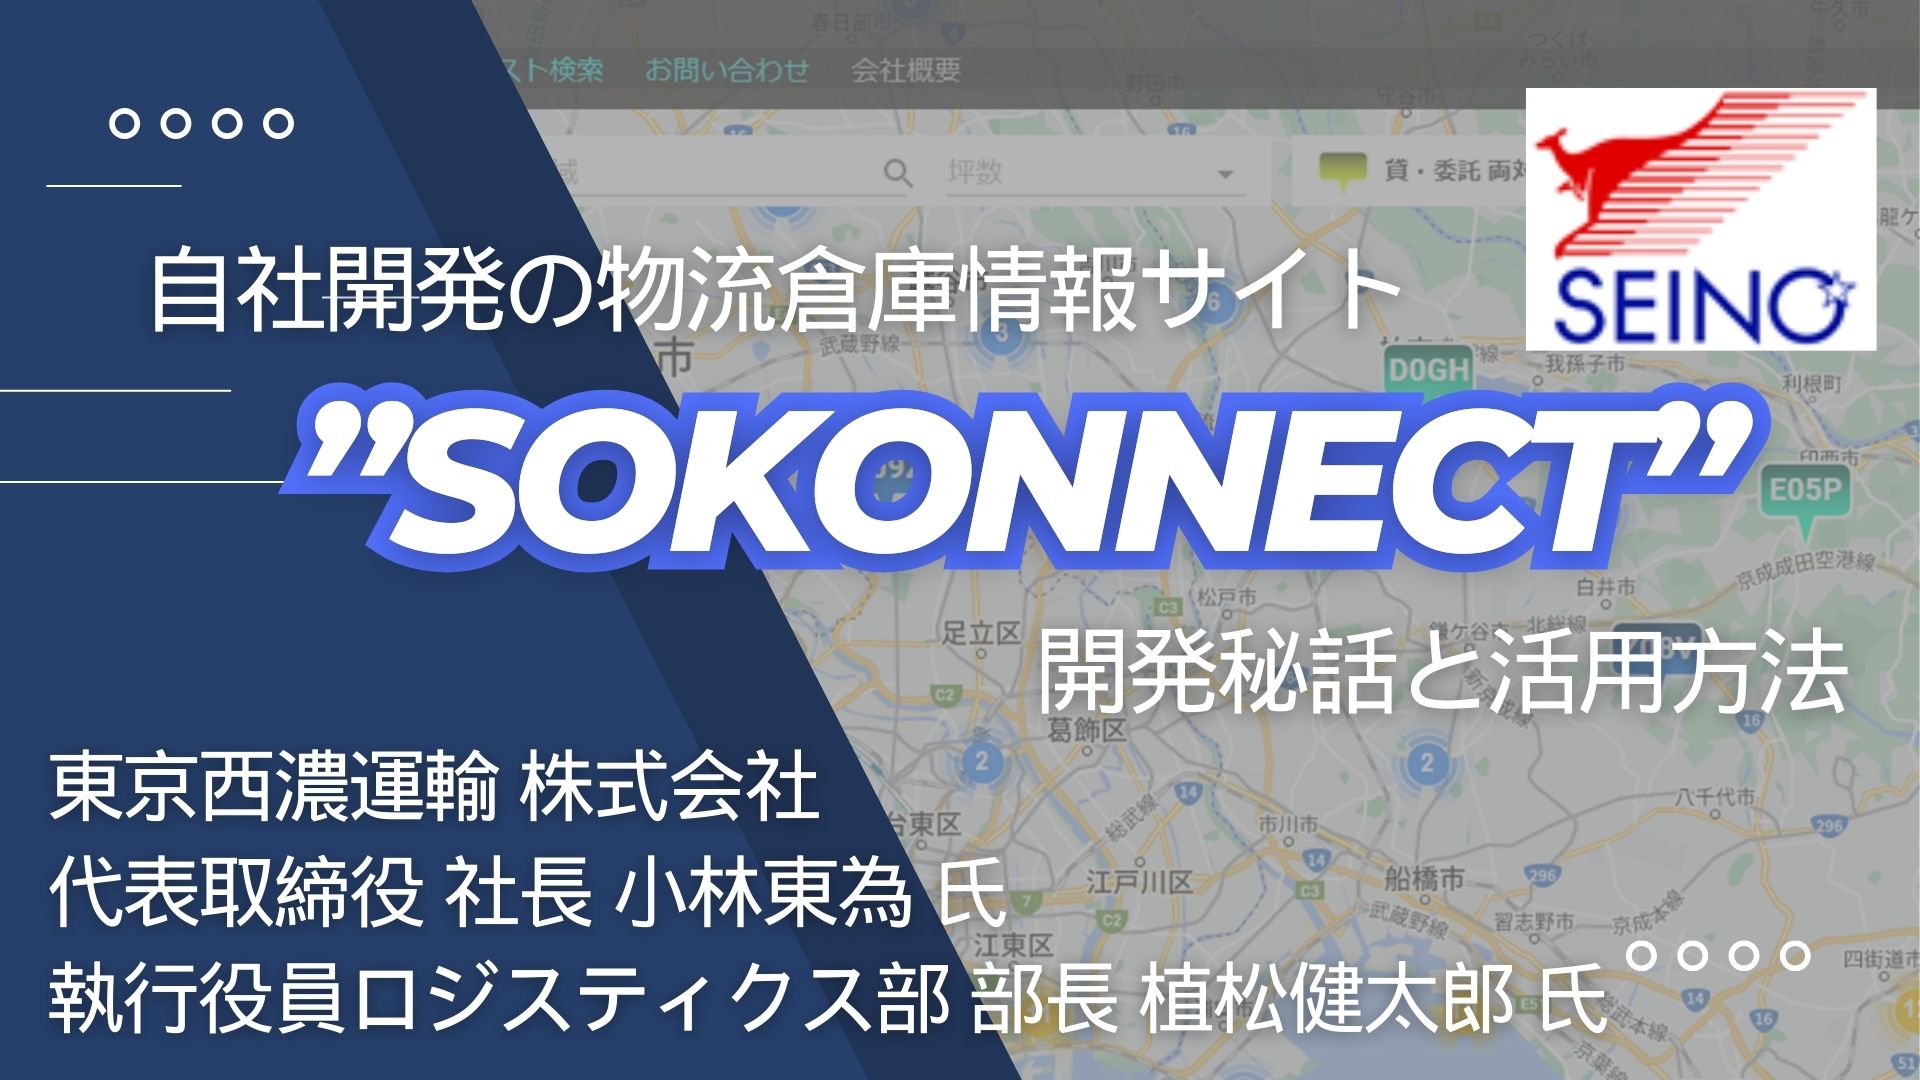 自社開発の物流倉庫情報サイト”SOKONNECT” 開発秘話と活用方法